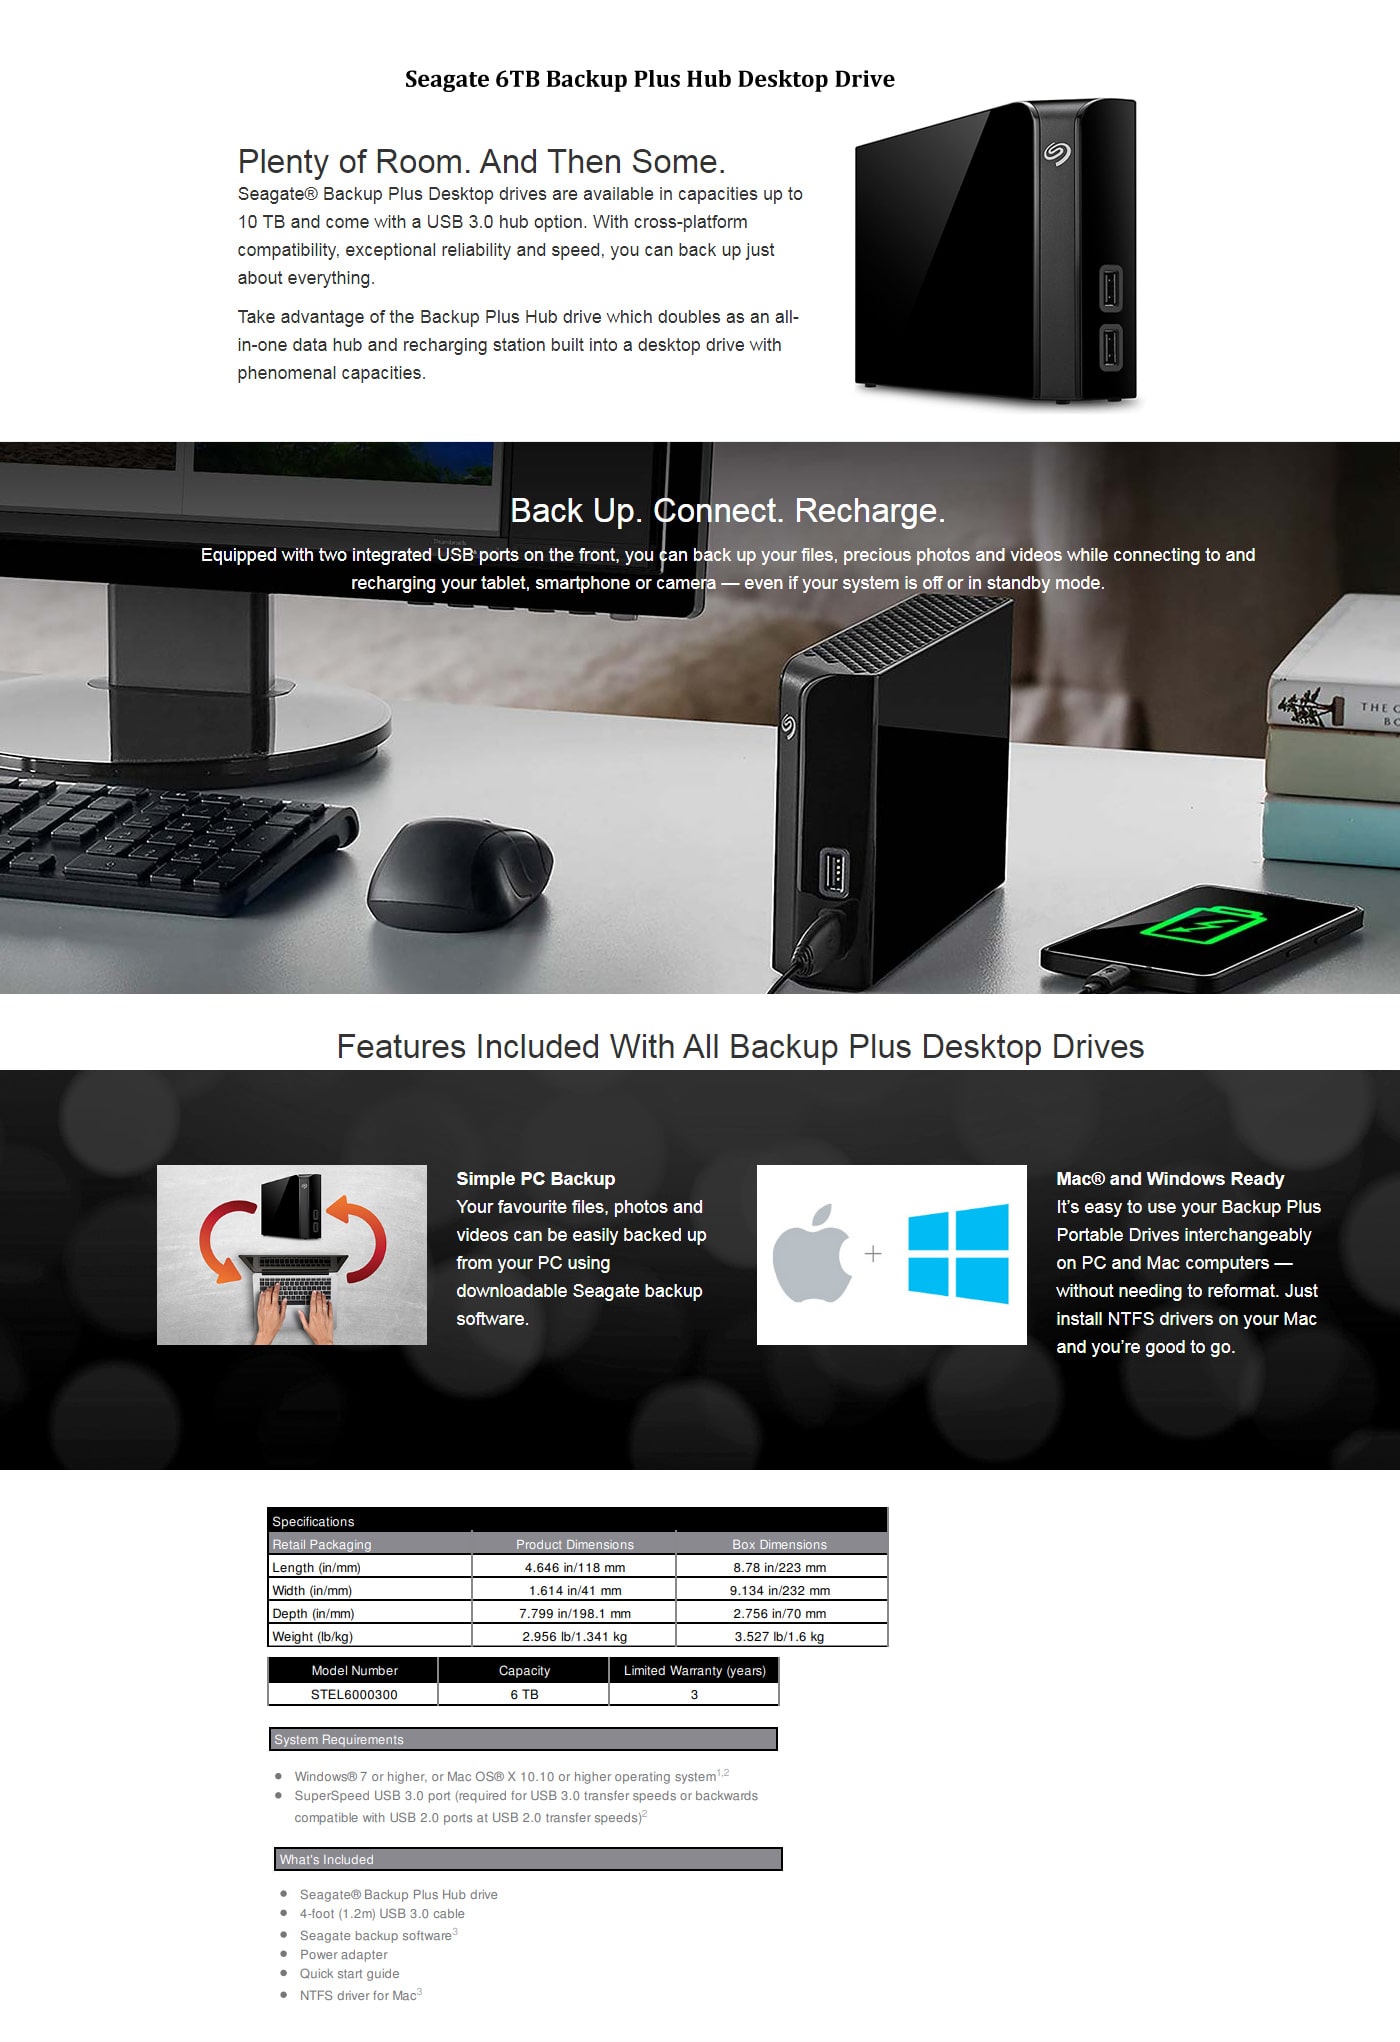 Seagate 6TB Backup Plus Hub Desktop Drive features